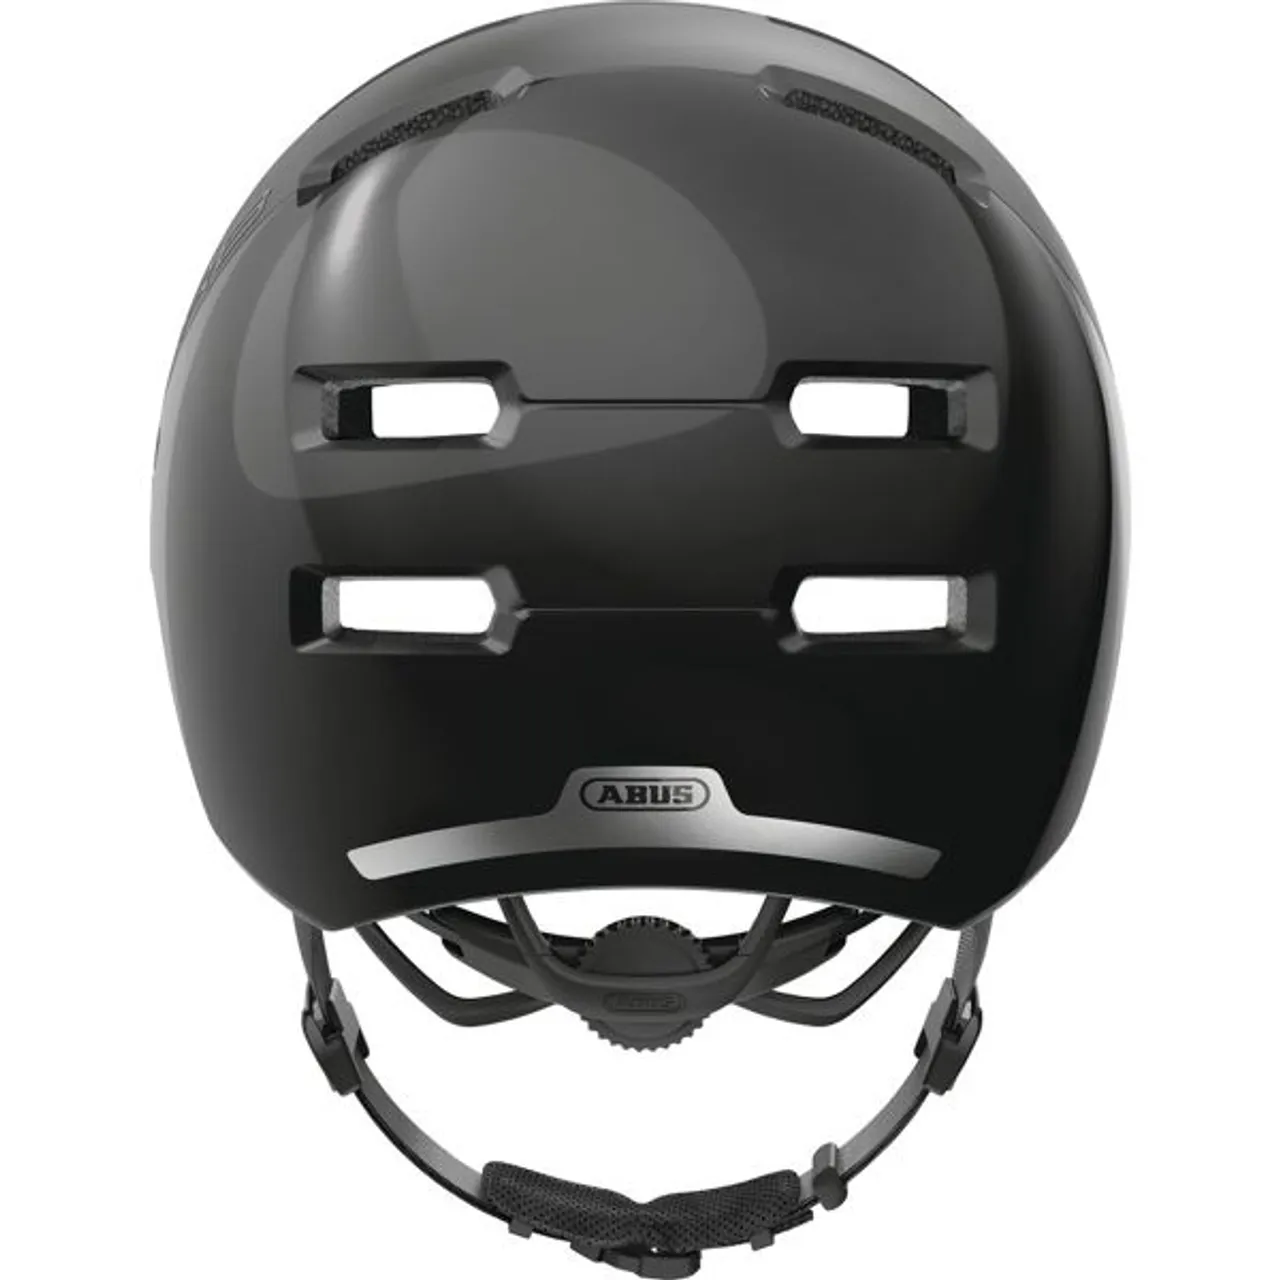 Fahrradhelm ABUS "SKURB ACE" Helme Gr. M Kopfumfang: 55 cm - 59 cm, schwarz (velvet black) Fahrradhelme für Erwachsene